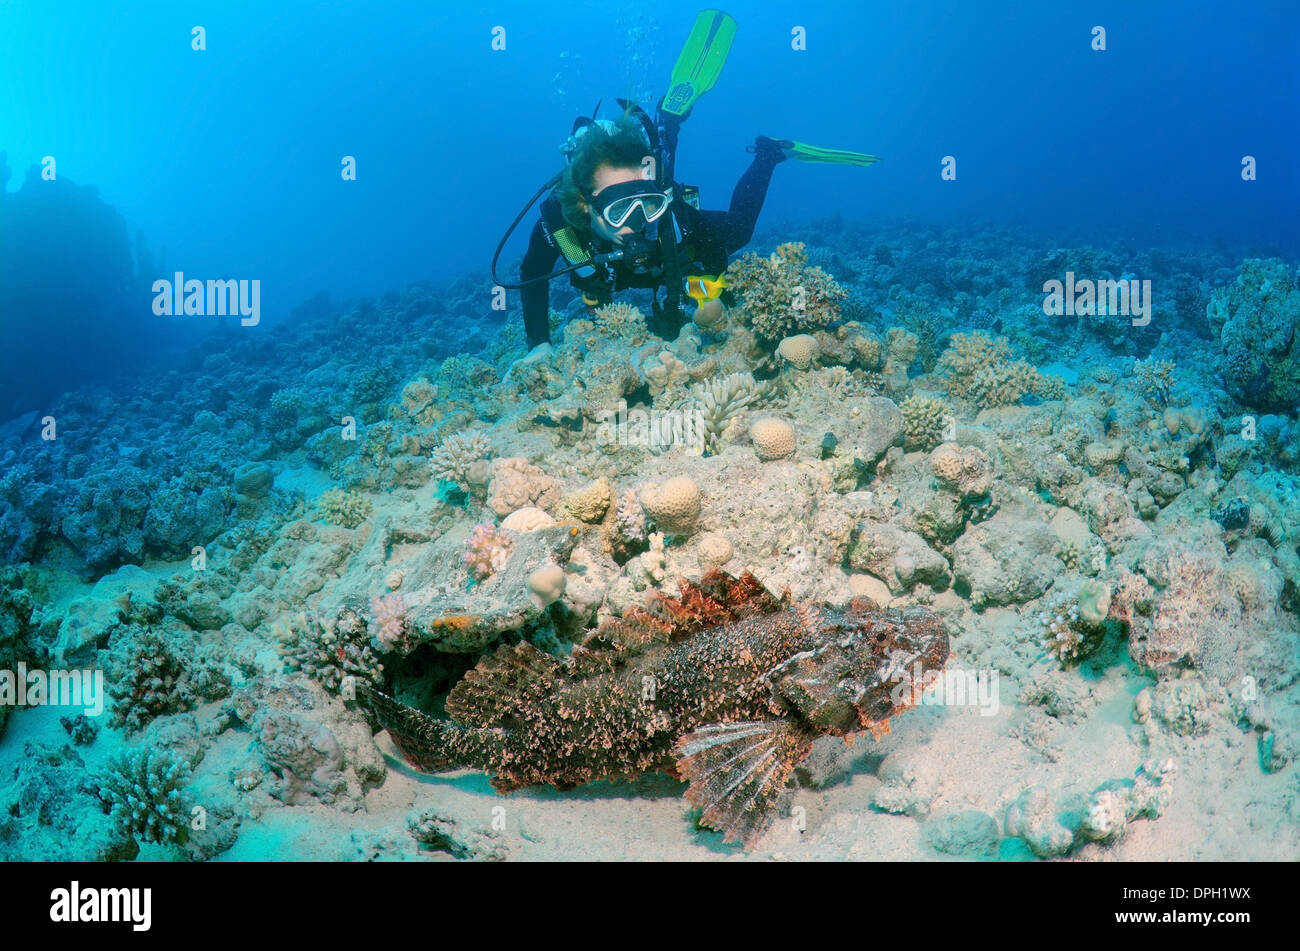 Diver looking at Tassled scorpionfish (Scorpaenopsis oxycephala), Red sea, Egypt, Africa  Stock Photo